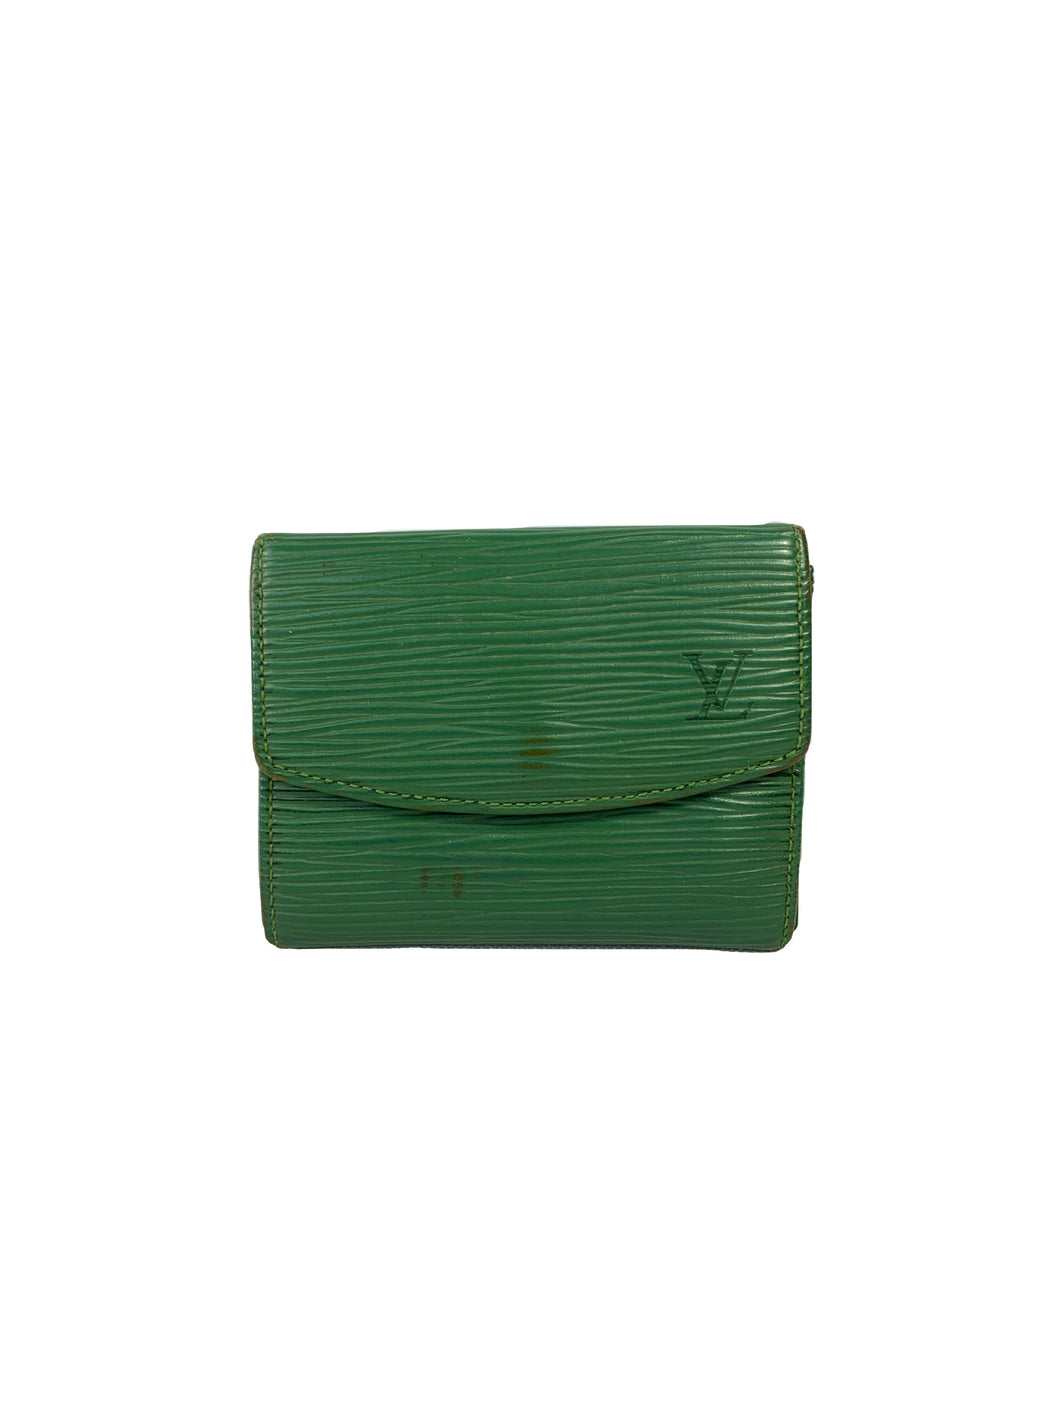 Louis Vuitton, Bags, Louis Vuitton Card Holder Epi Leather Green